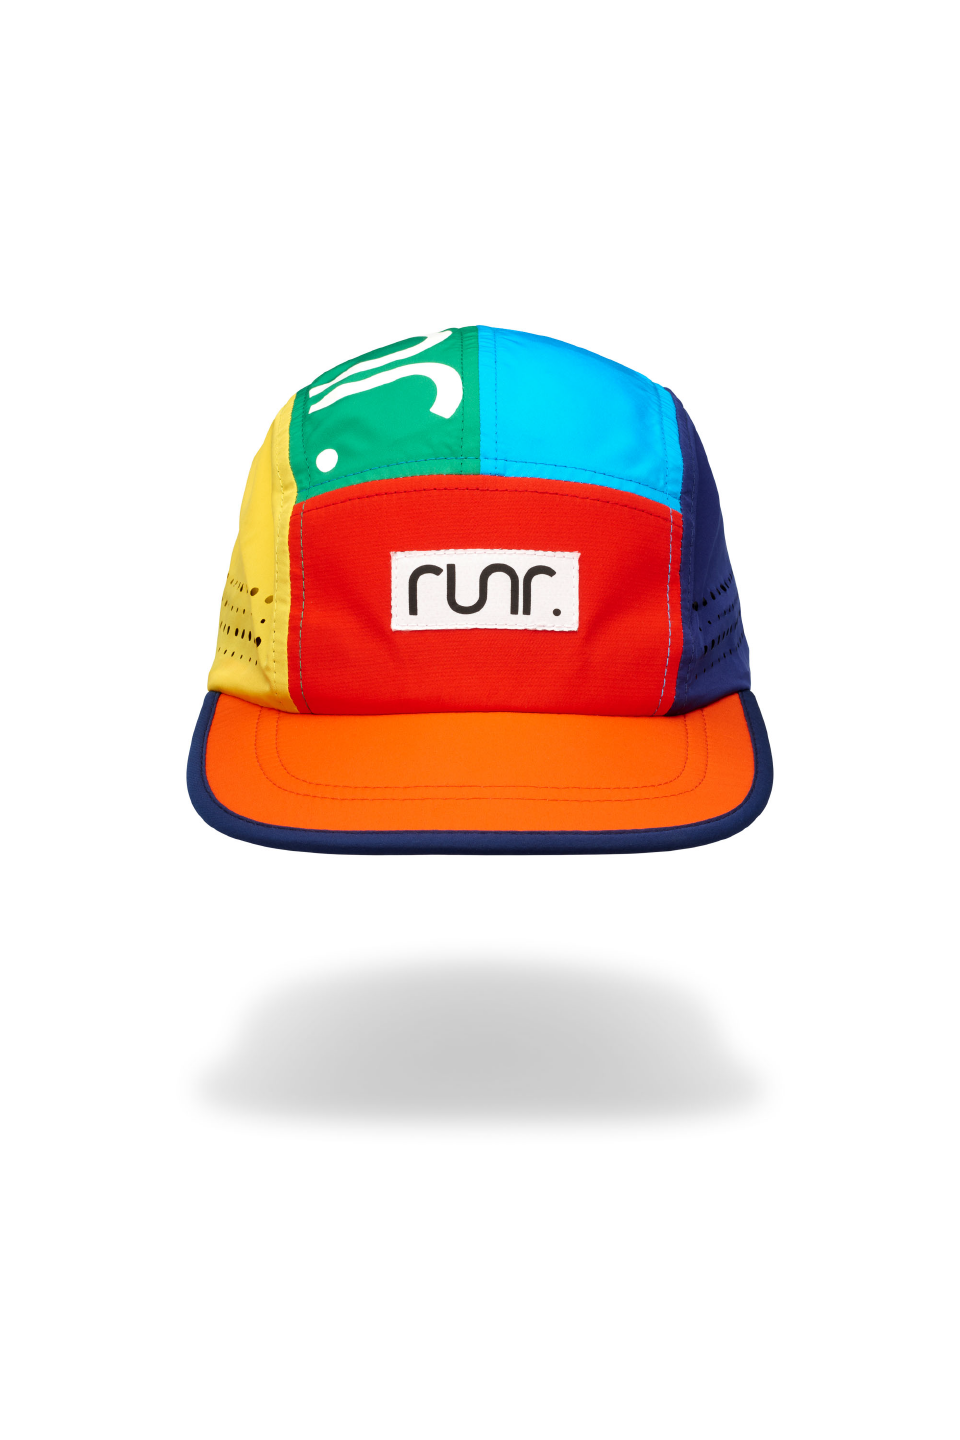 Runr Rio & Munich Running Hat Bundle